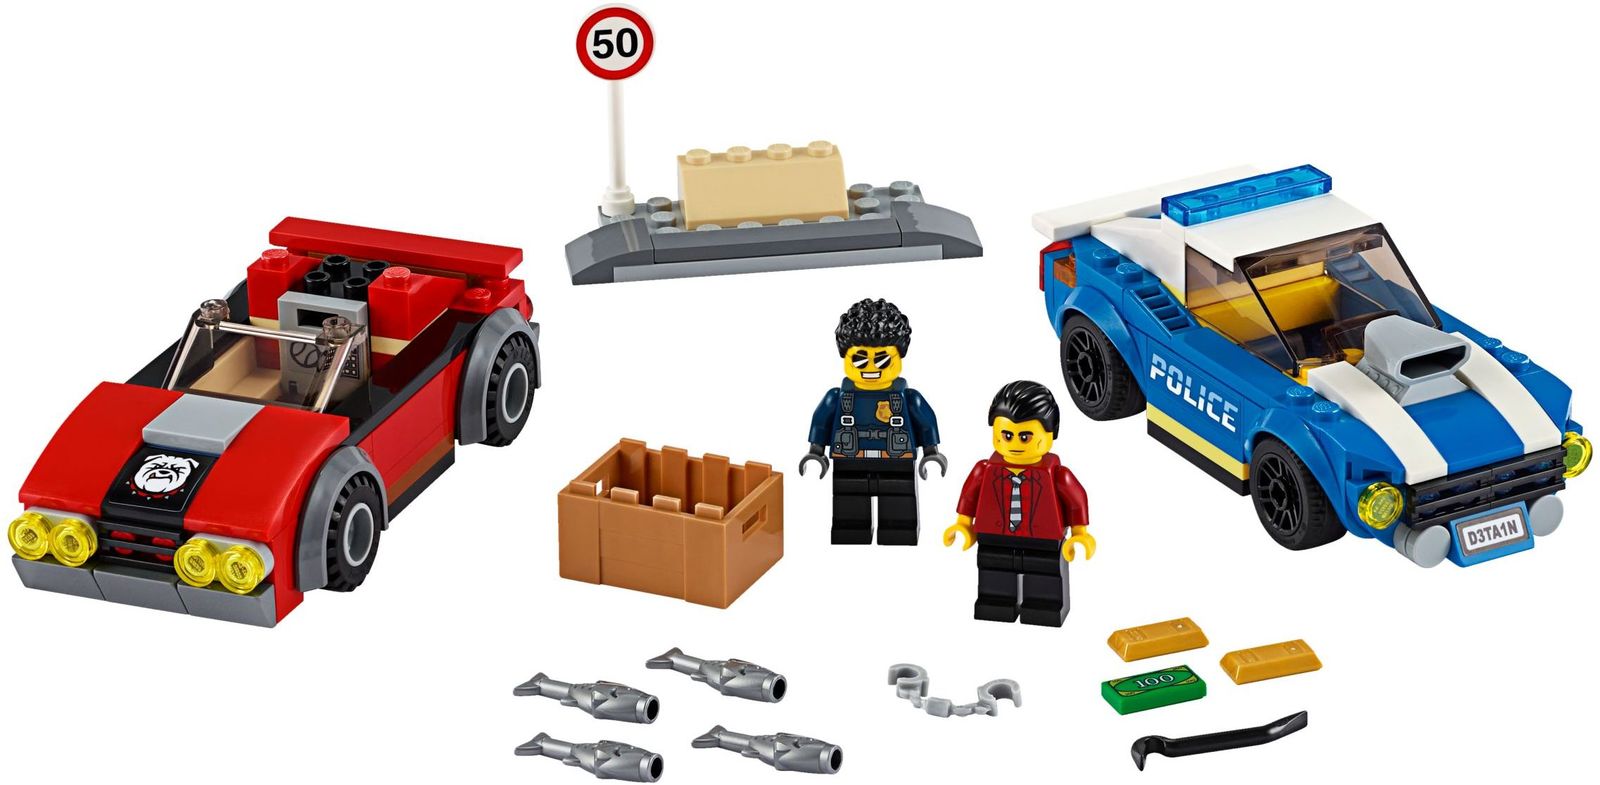 LEGO City: Police Highway Arrest (60242)